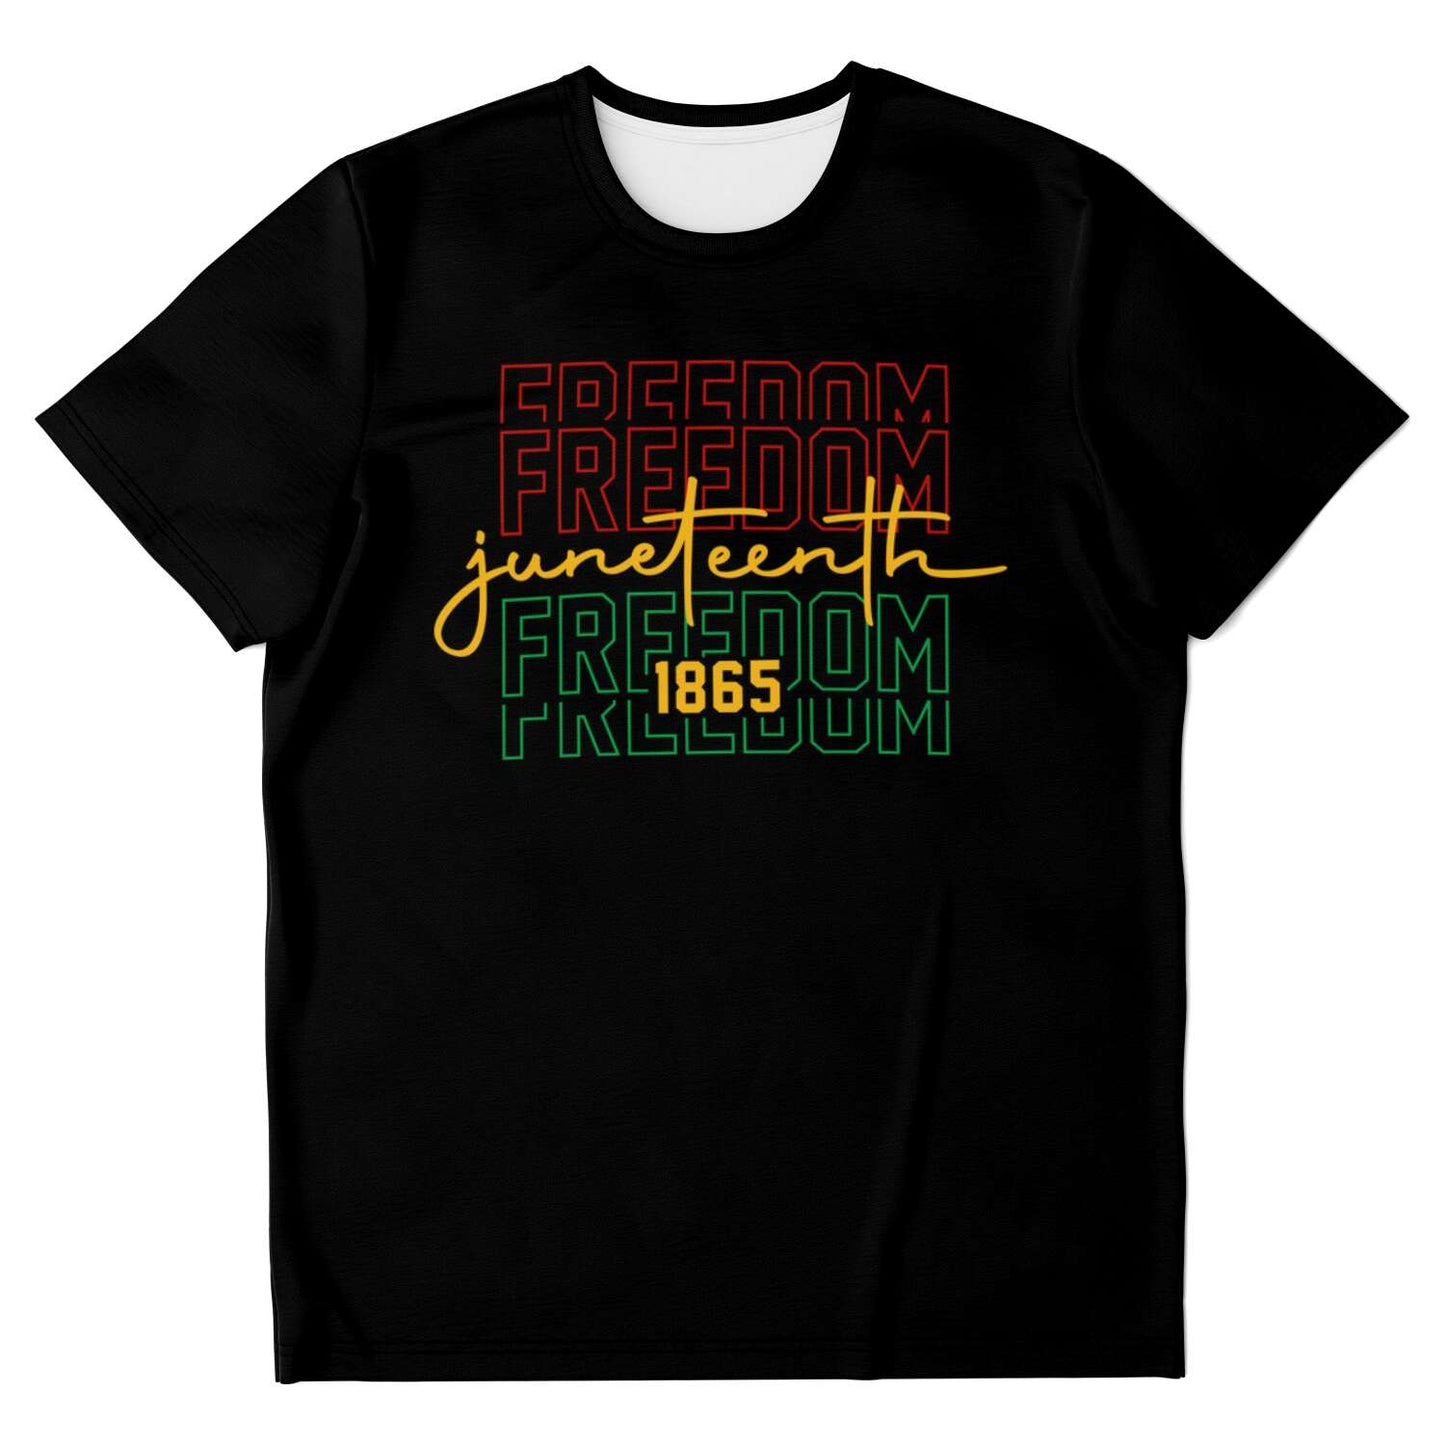 1865 Juneteenth Freedom Shirt